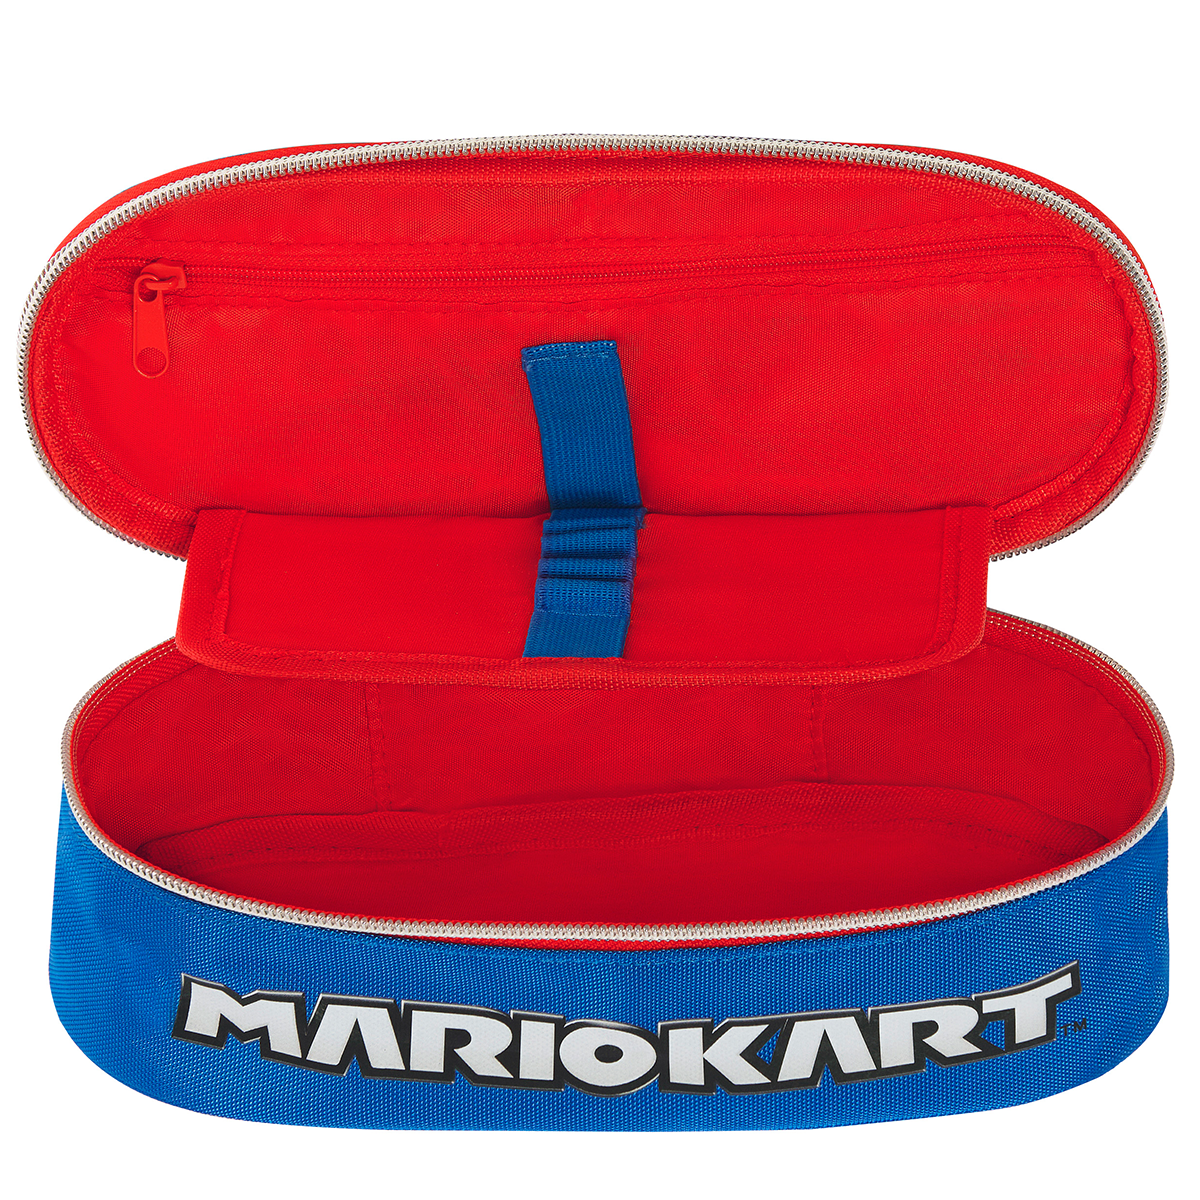 Super Mario Trousse Mario Kart Ovale 22 x 6 x 9,5 cm 